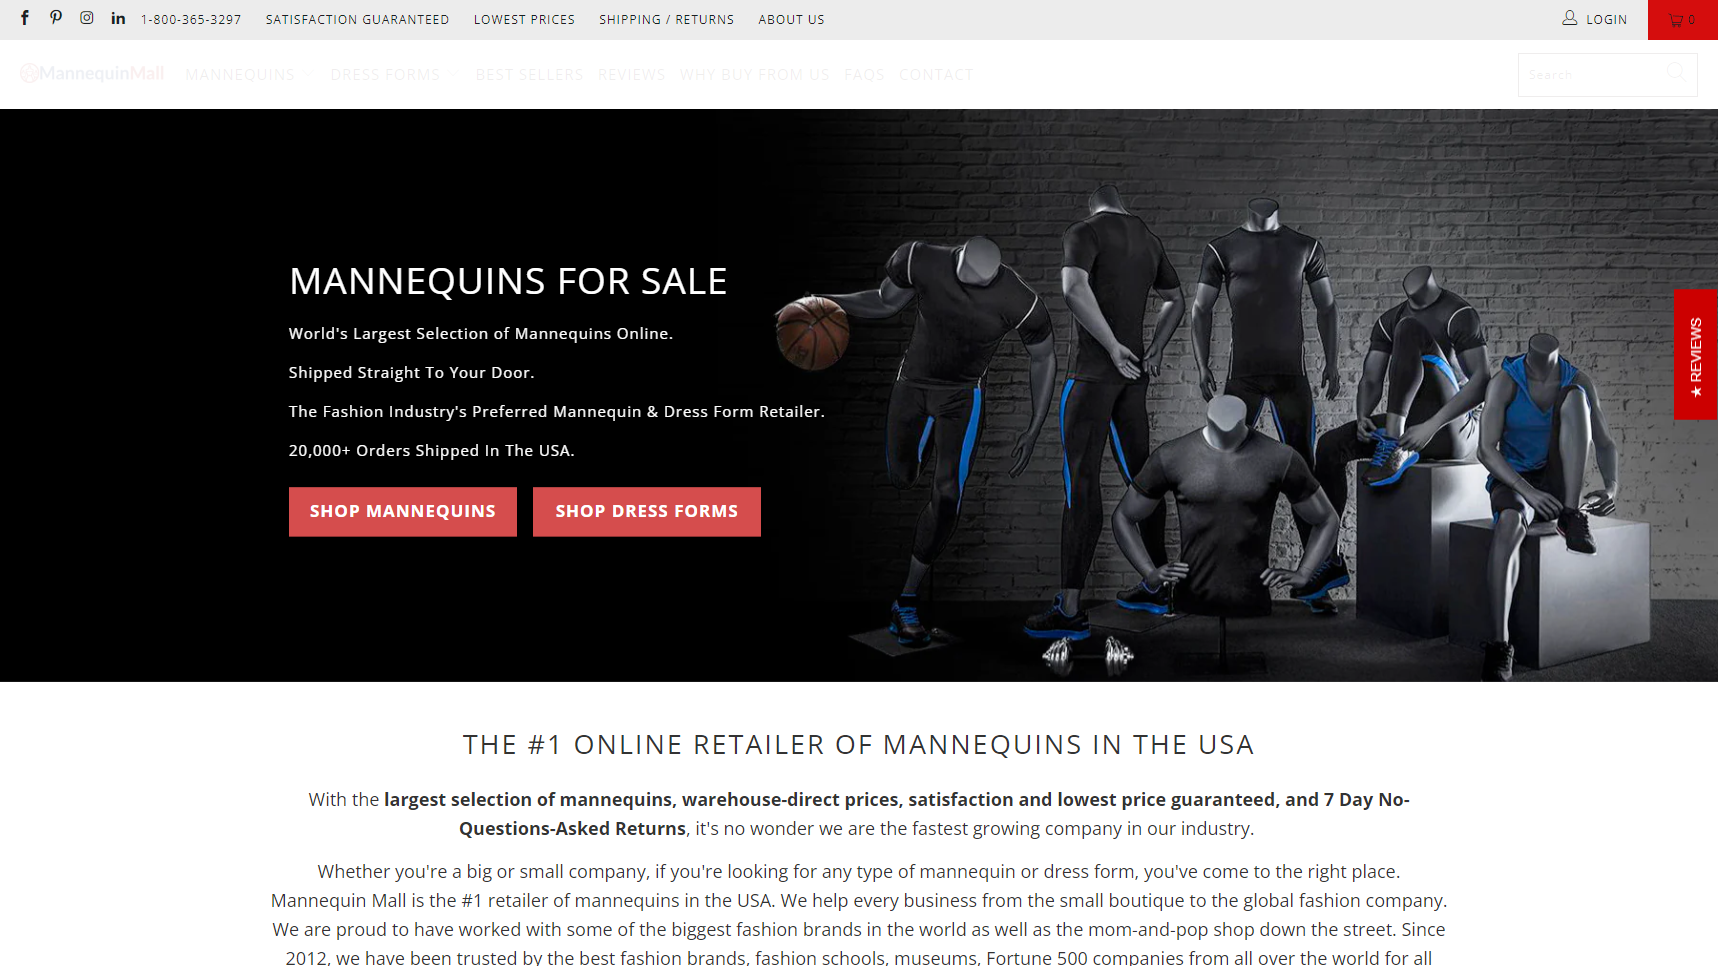 Mannequin Mall - Department Store Mannequin Manufacturer